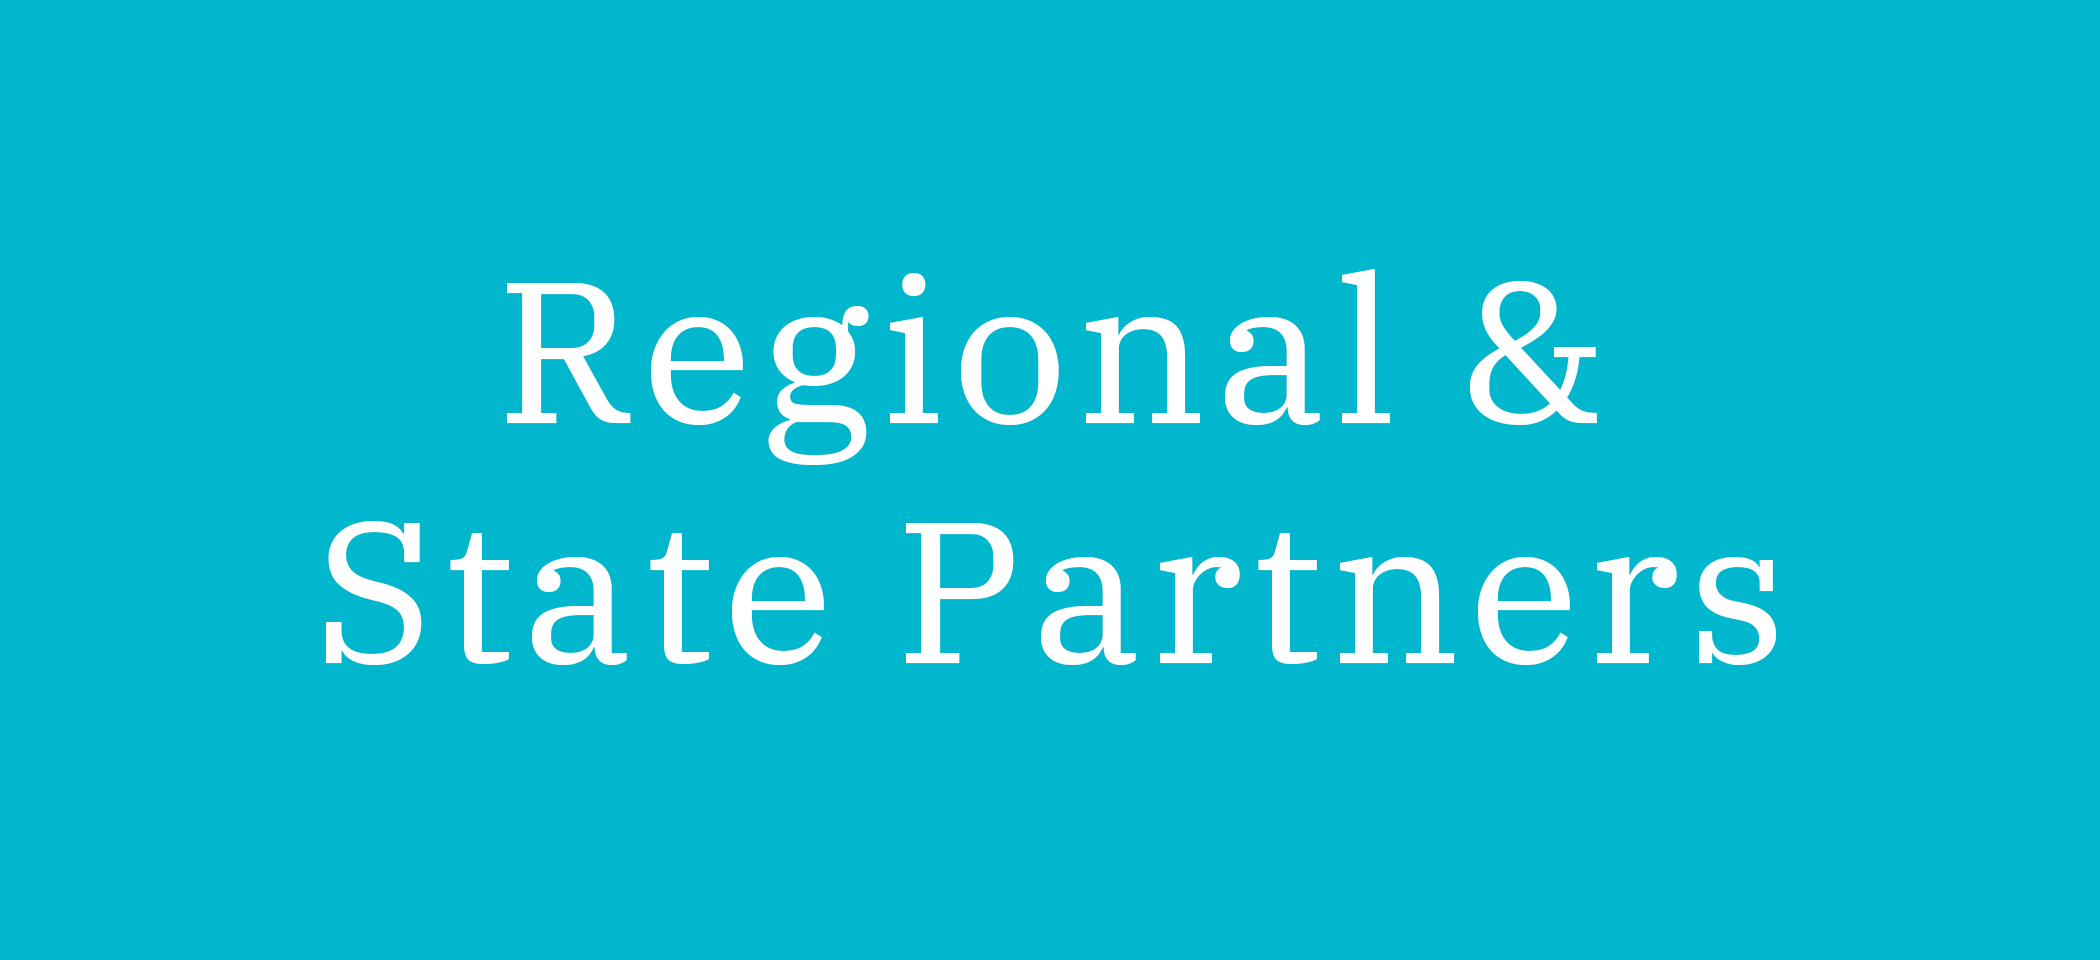 For Regional & State Partnerships